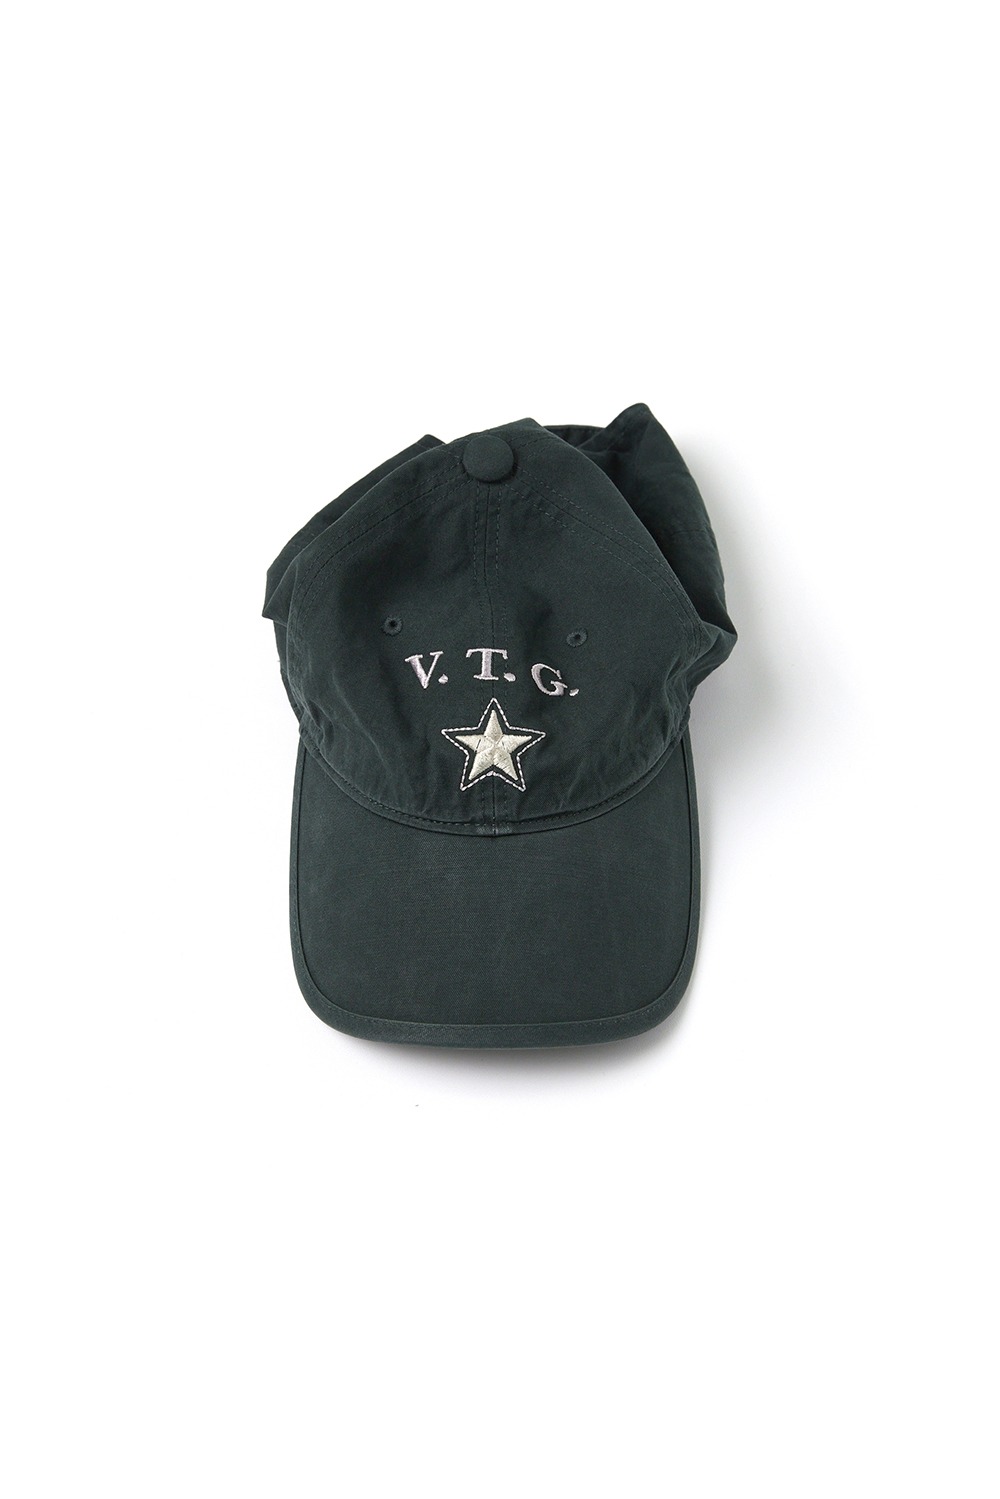 VTG Star Cap Washed Dark Green (Restock)